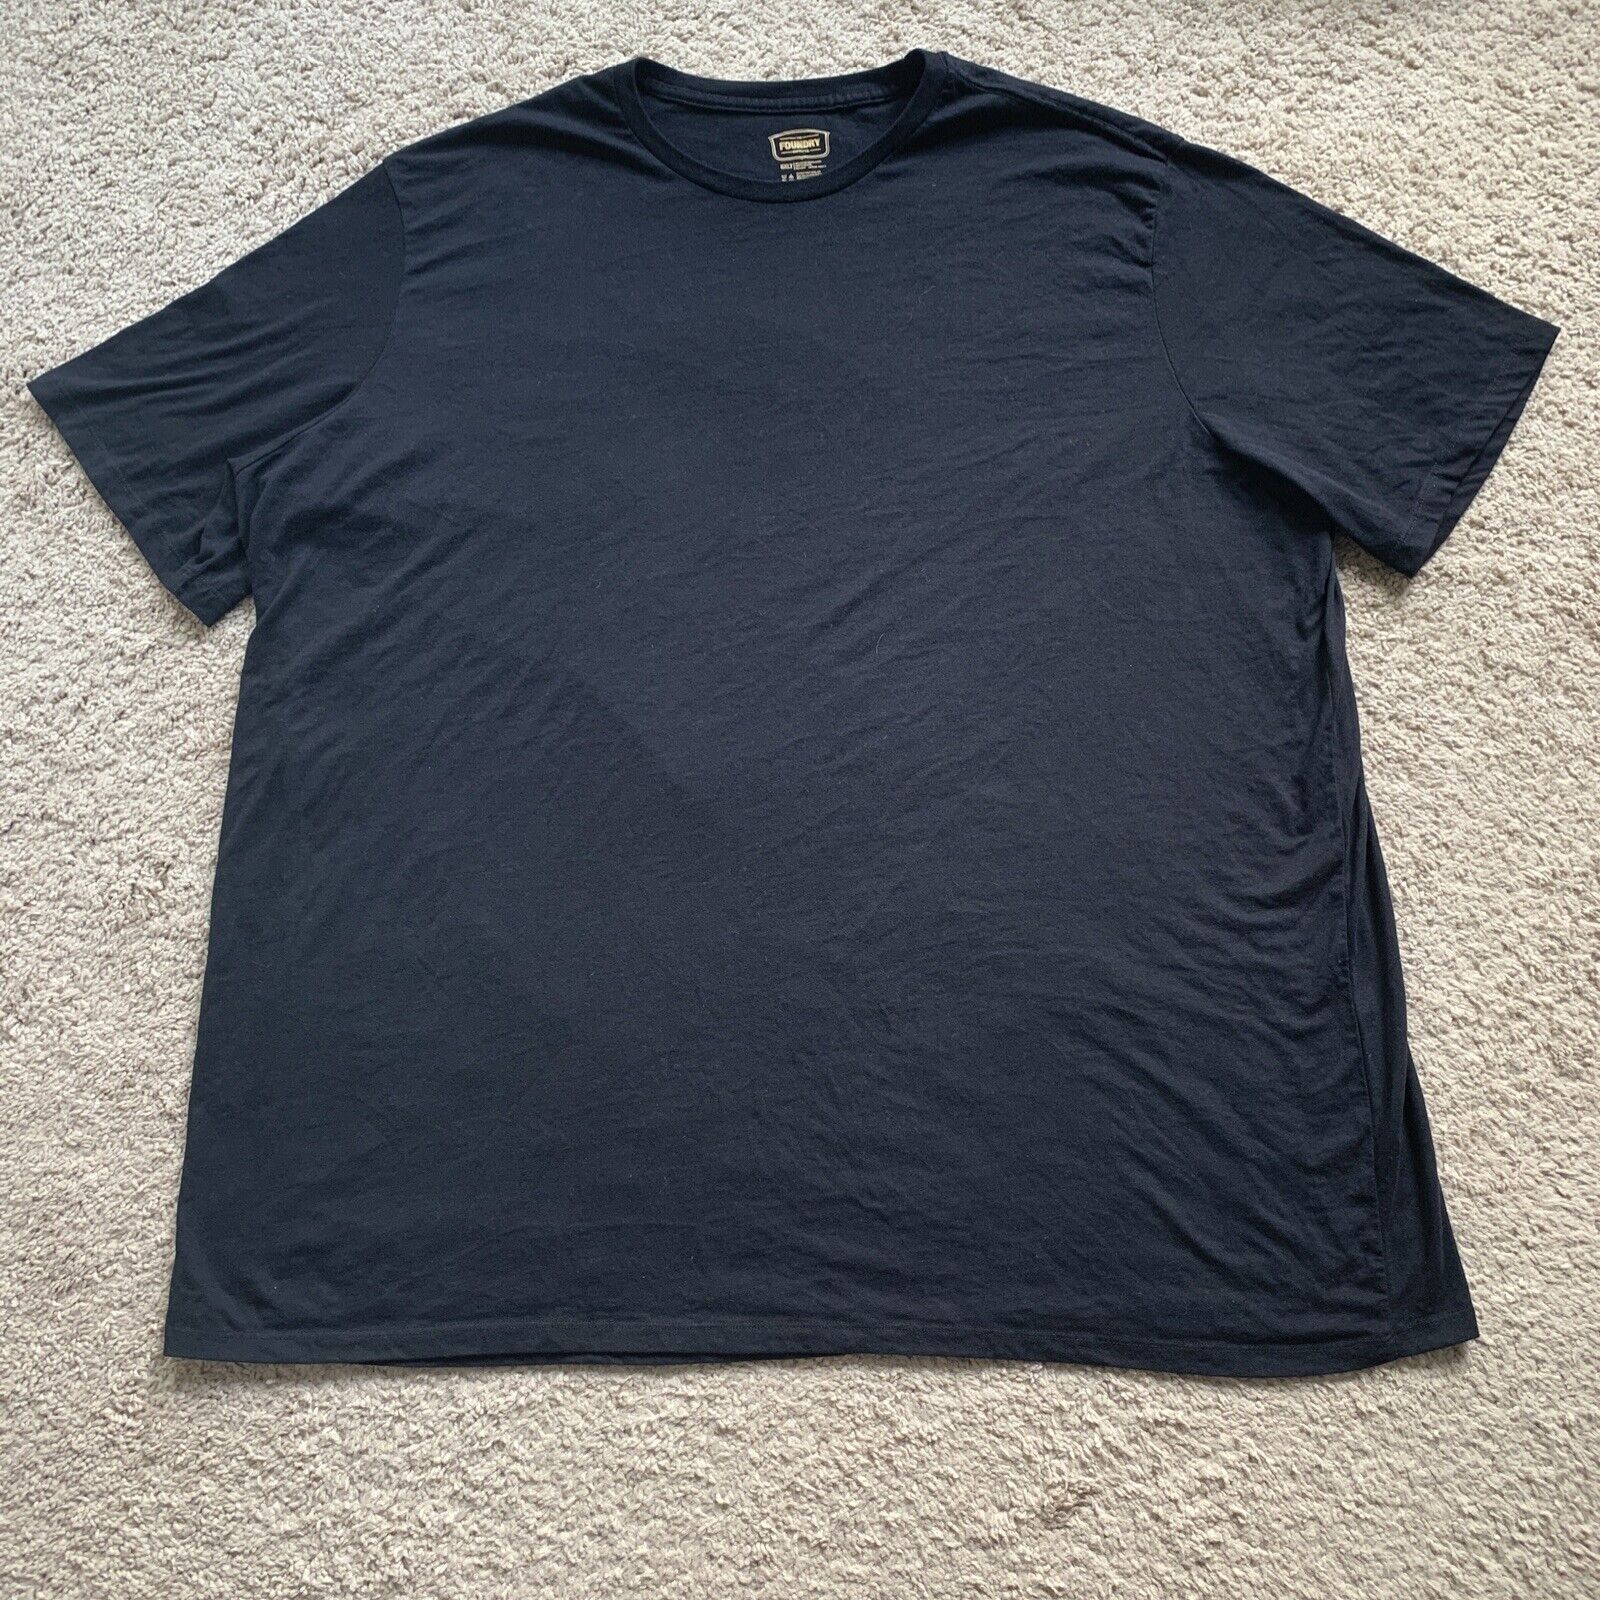 The Foundry T-Shirt Men's 5XLT Tall Black Short Sleeve Cotton Poly Blend  1613